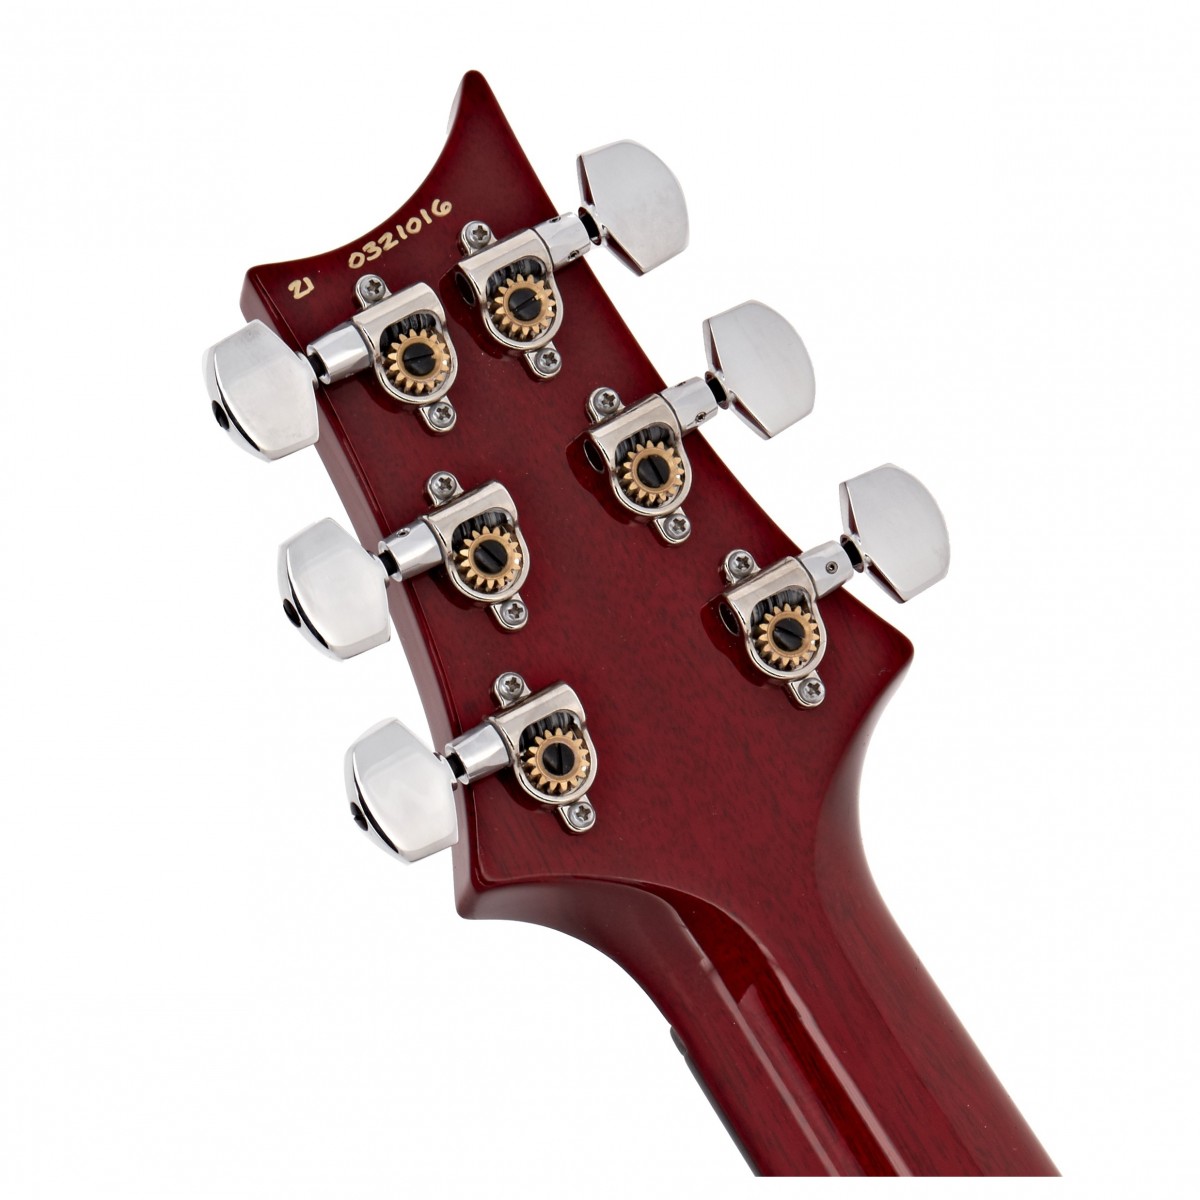 Prs Custom 24 Usa 2h Trem Rw - Charcoal Cherry Burst - Guitarra eléctrica de doble corte. - Variation 7